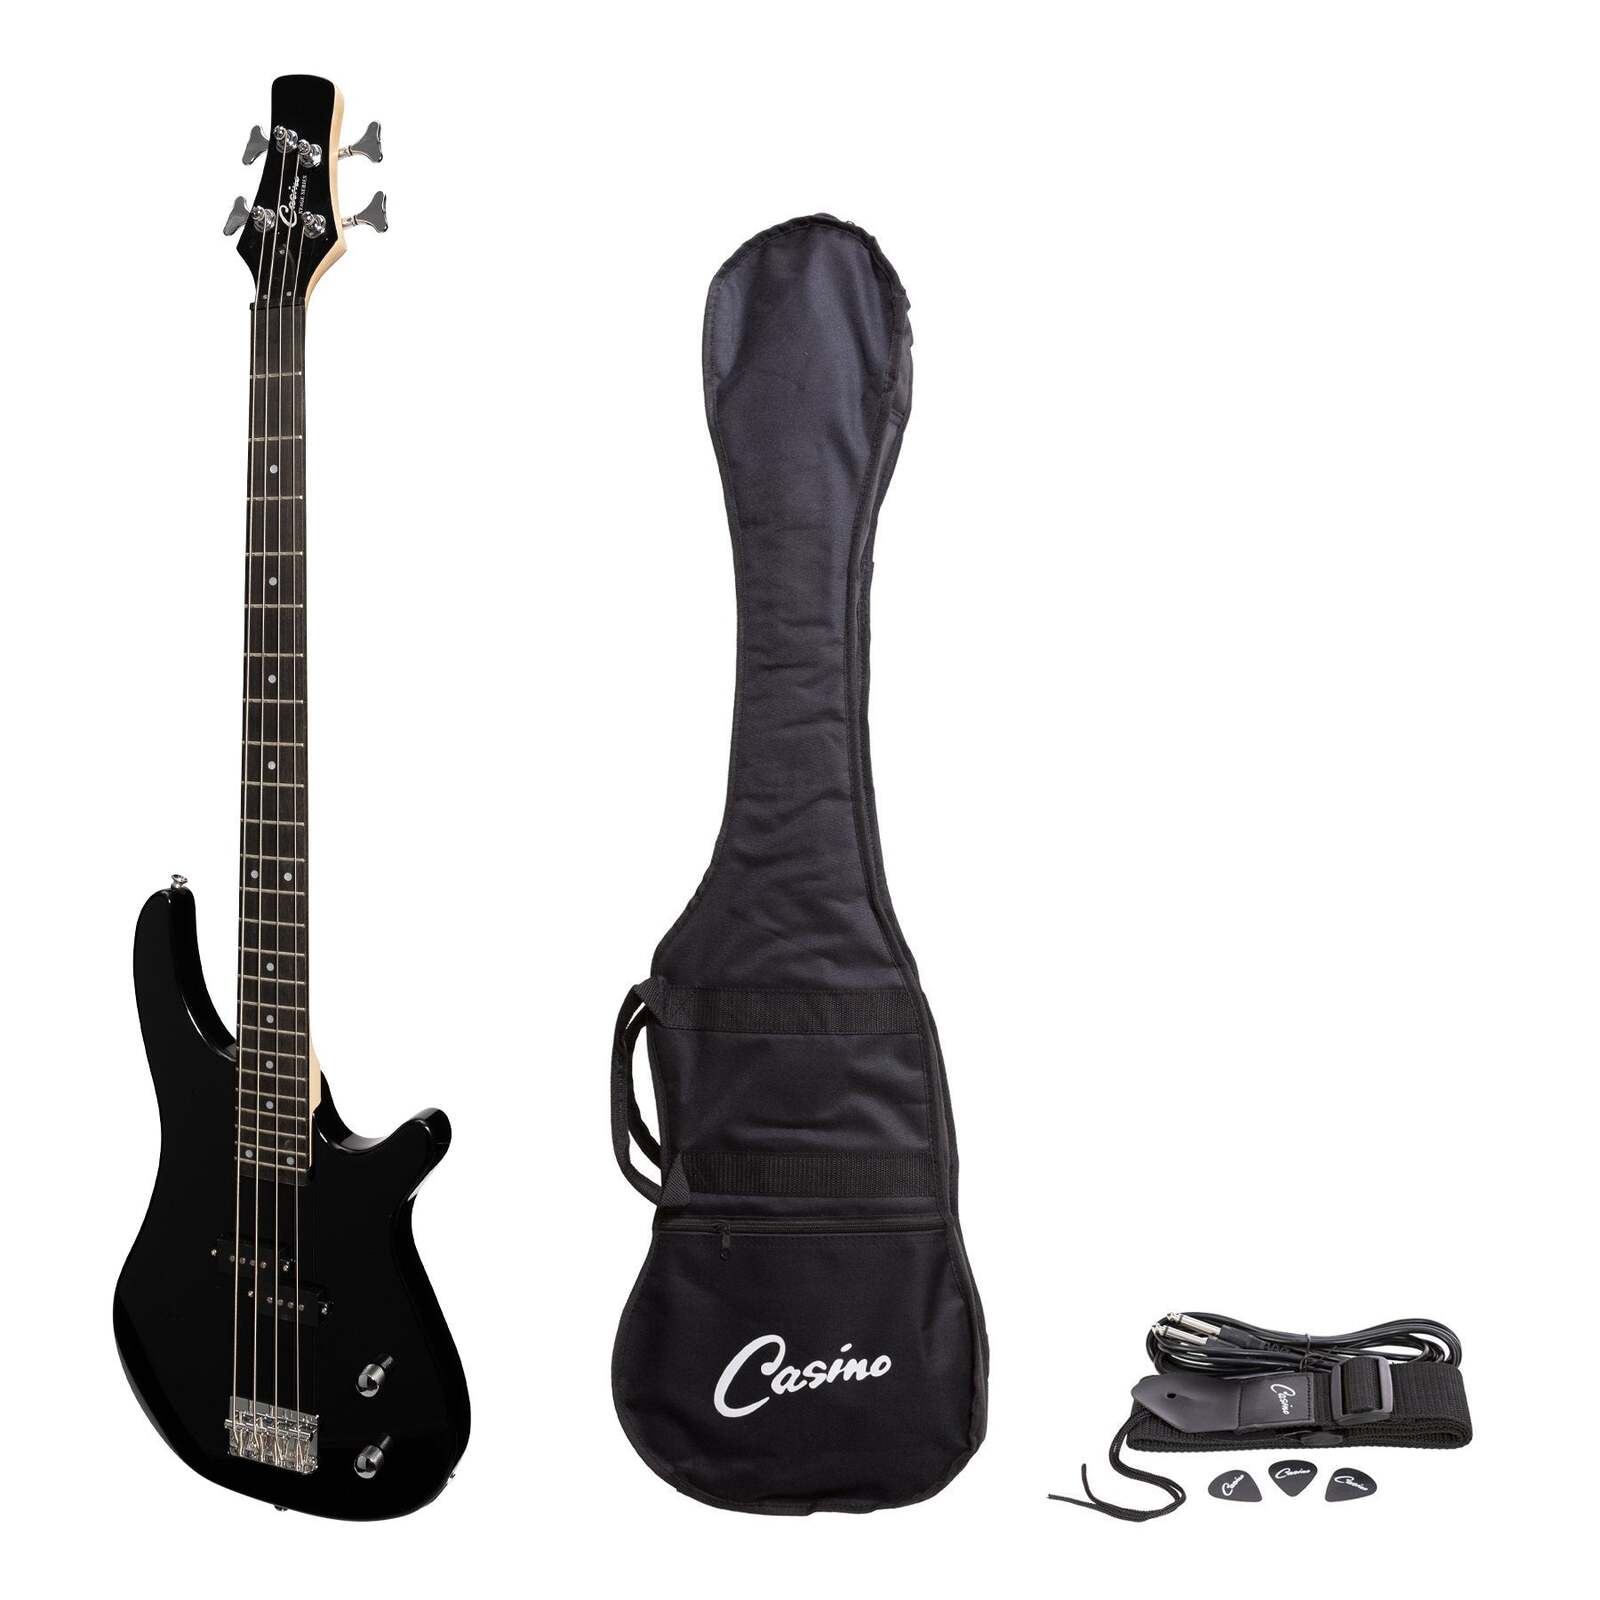 '24　Set　Series'　Guitar　Electric　Bass　Tune-Style　Casino　(Black)